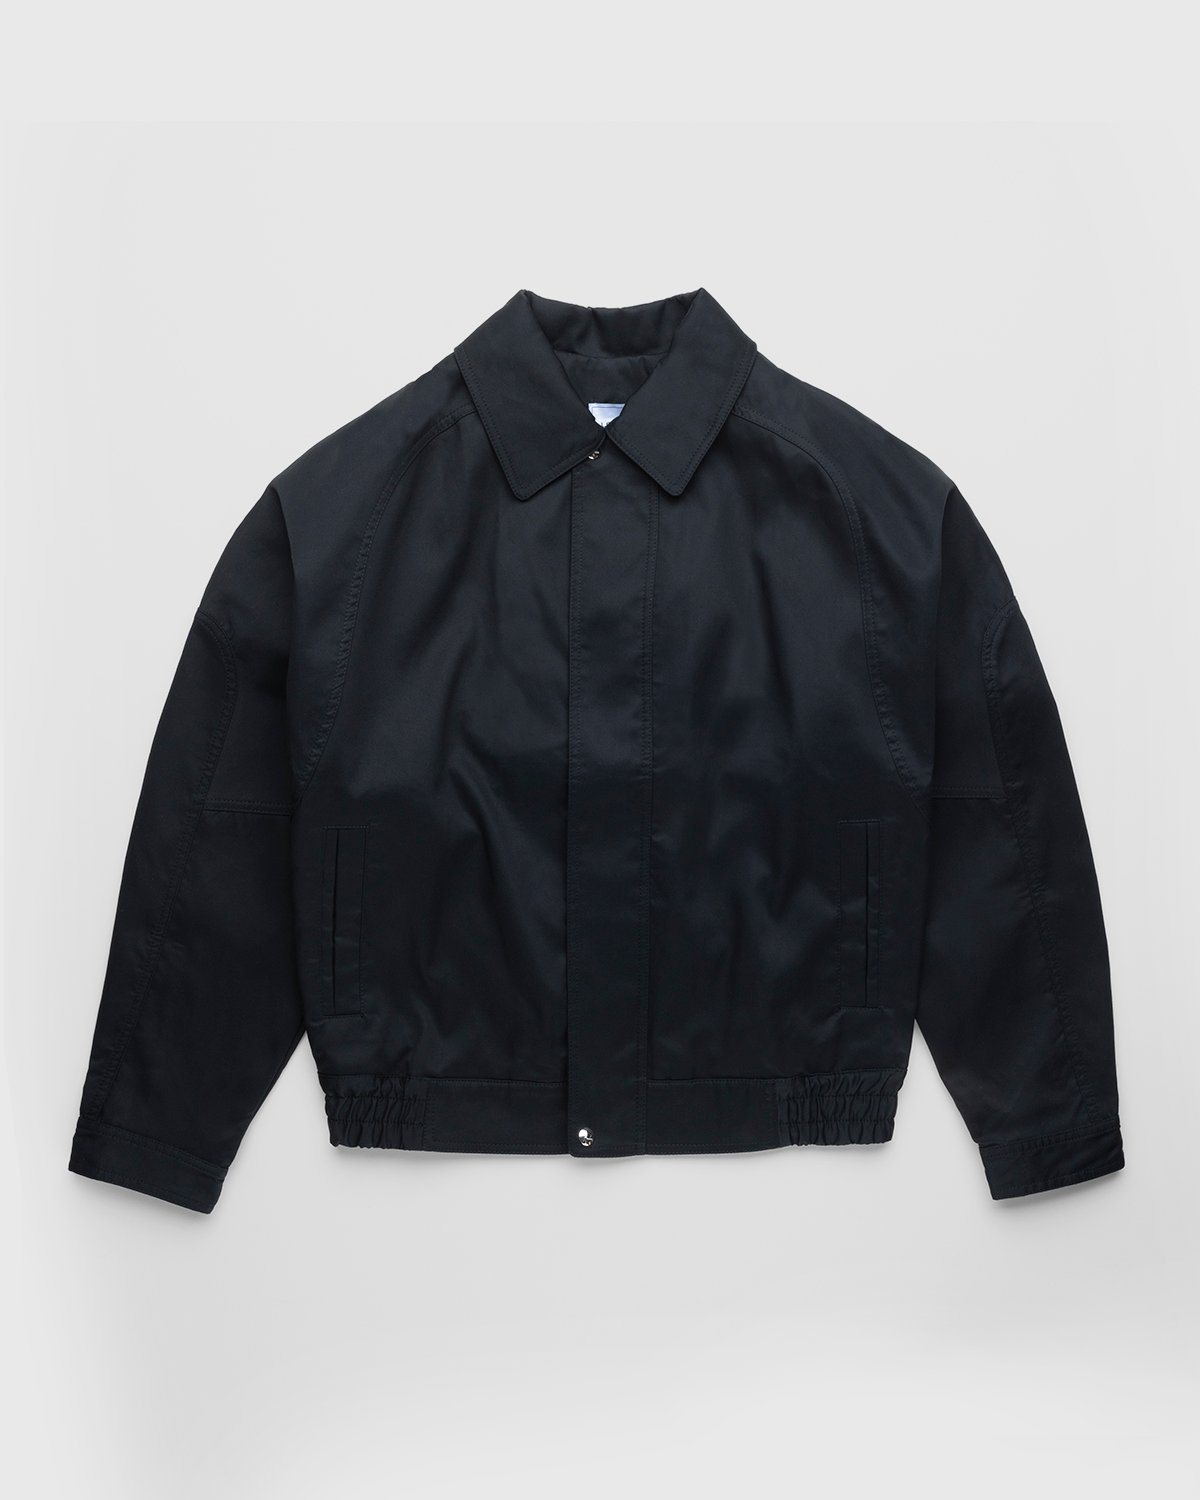 Lourdes New York – Backless Jacket Black | Highsnobiety Shop